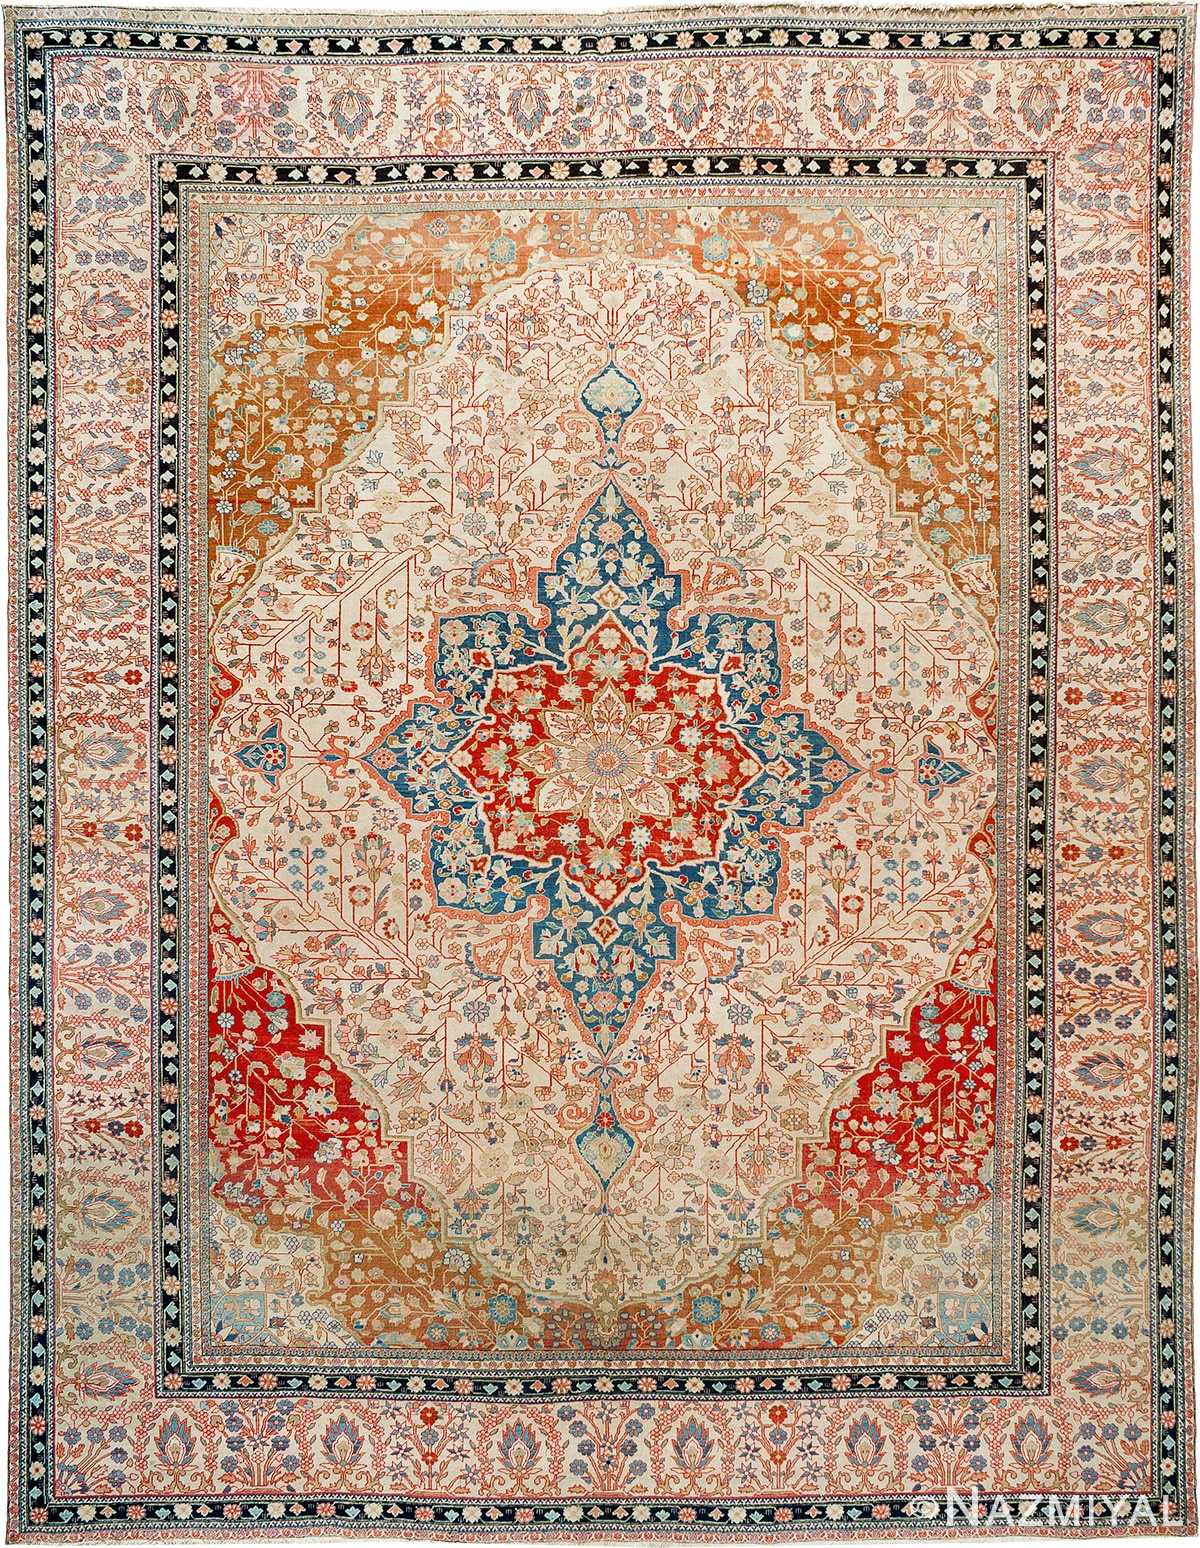 Fine Antique Persian Mohtashem Kashan Rug 90008 by Nazmiyal Antique Rugs